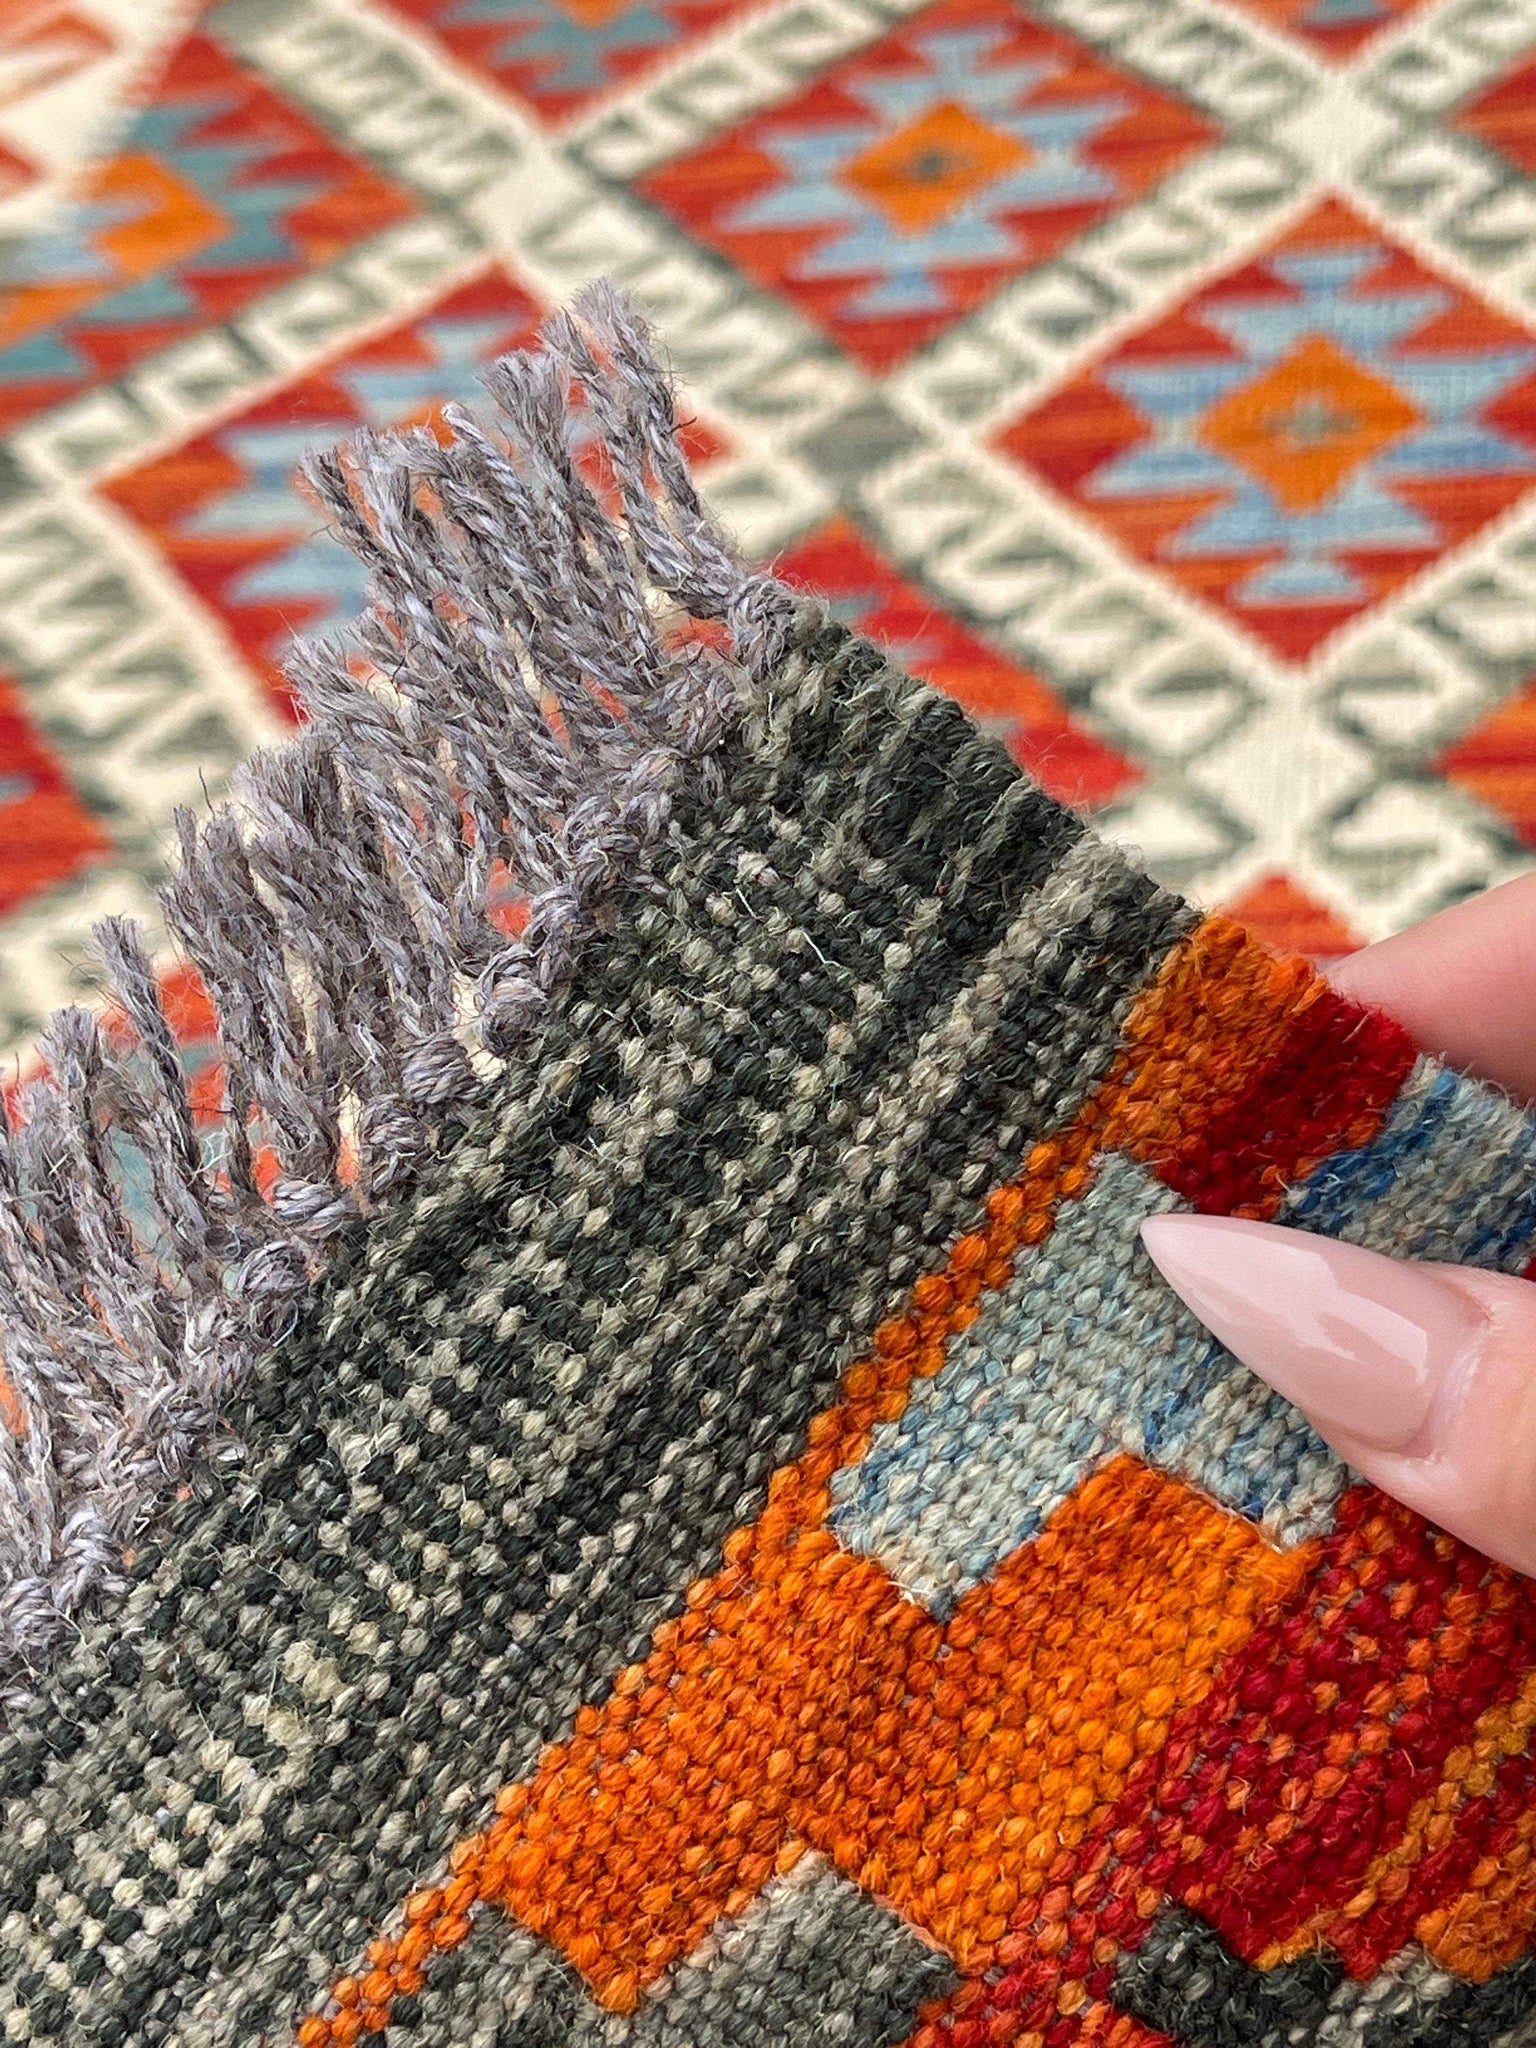 3x14 (90x410) Handmade Afghan Kilim Rug Runner | Red Orange Ivory Blue Sage Green | Flatweave Flat Weave Tribal Oriental Boho Wool